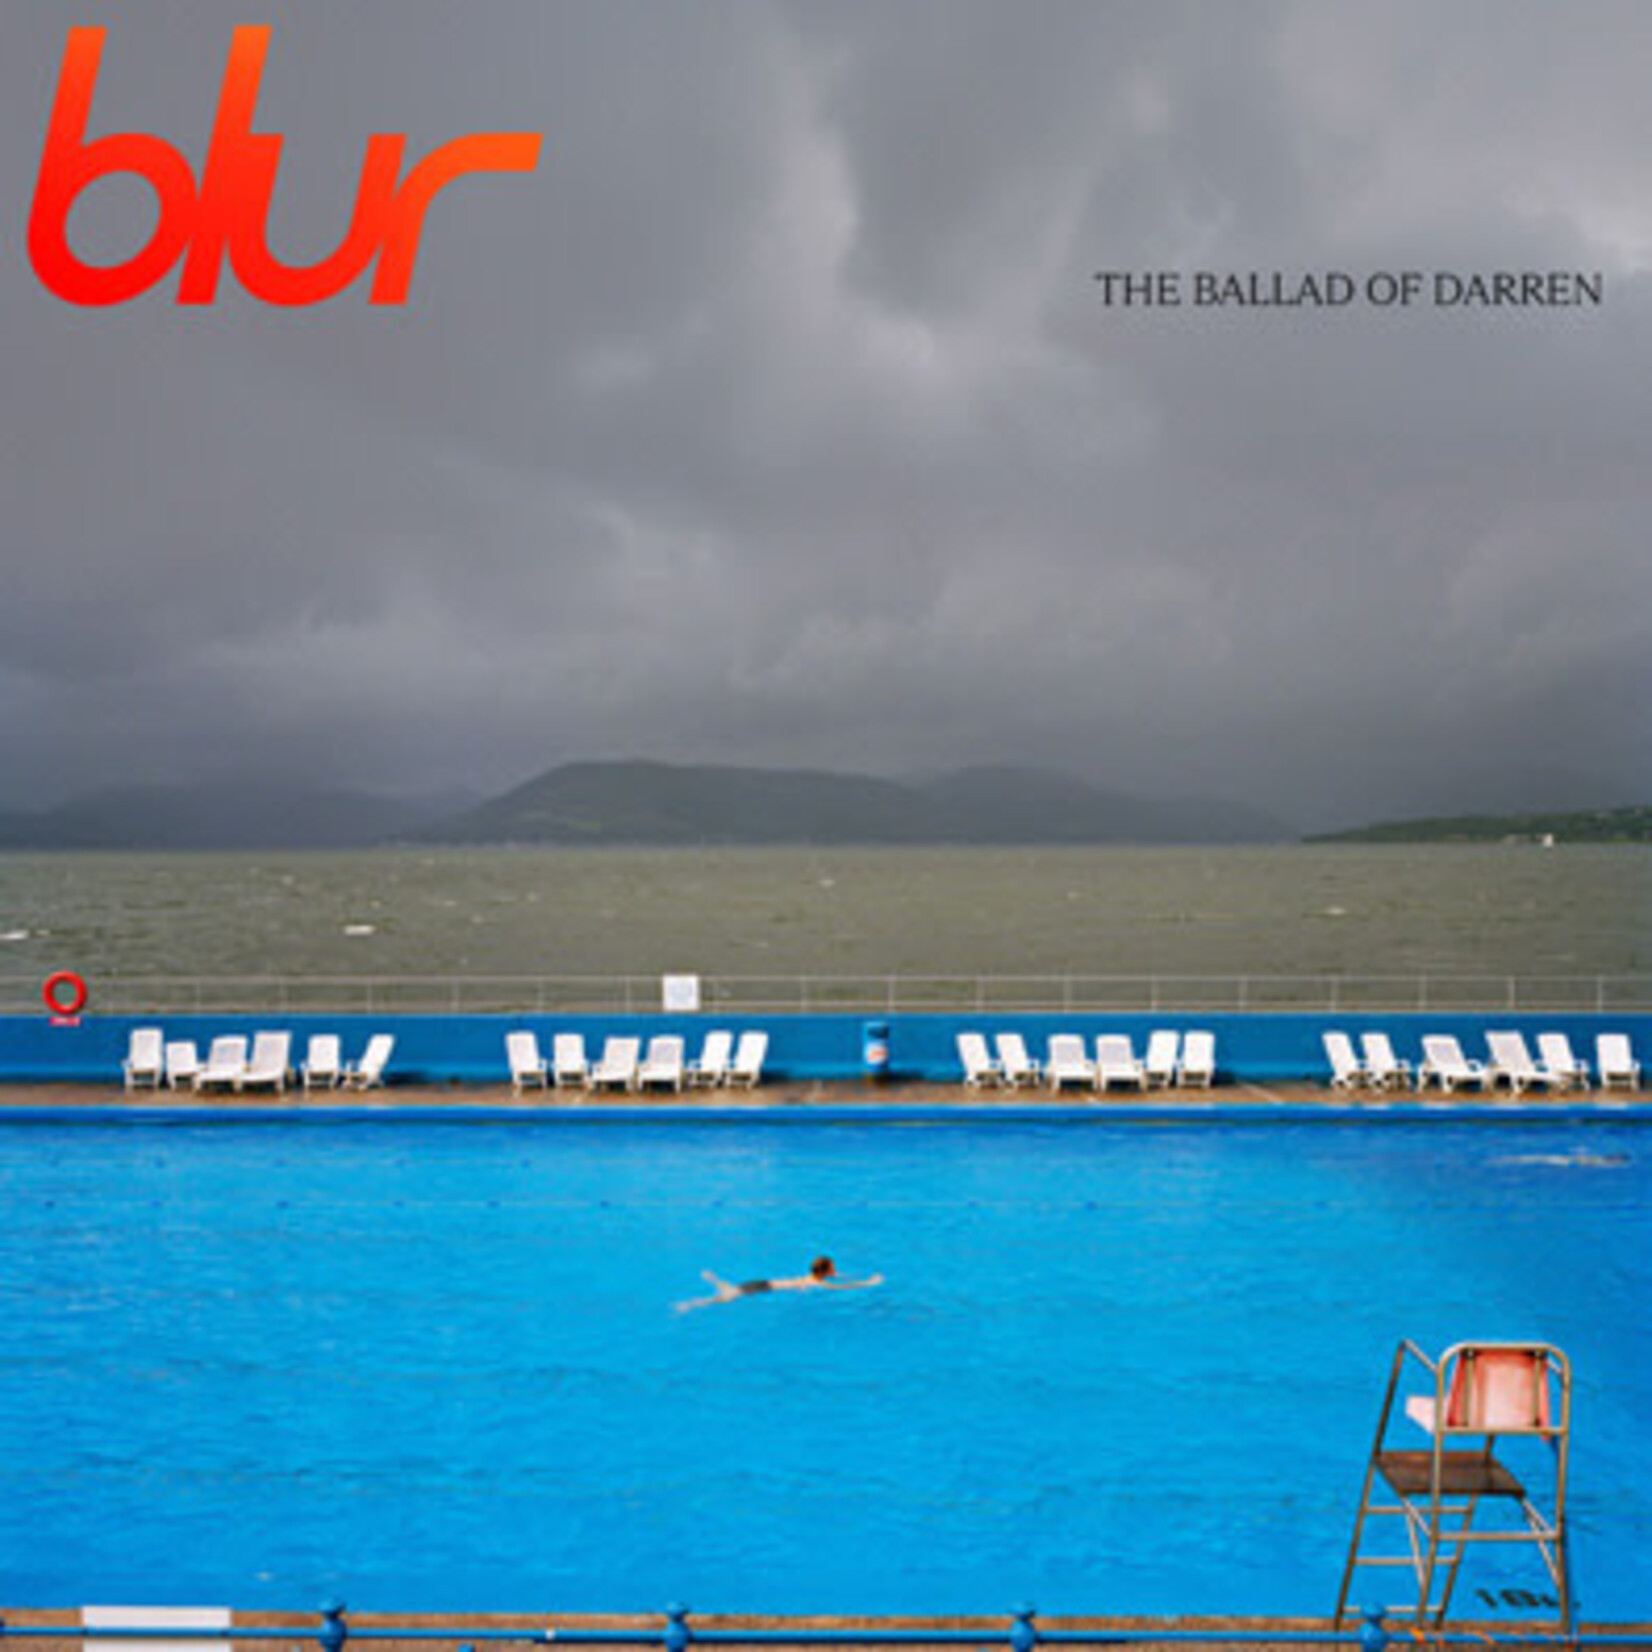 [New] Blur - The Ballad Of Darren